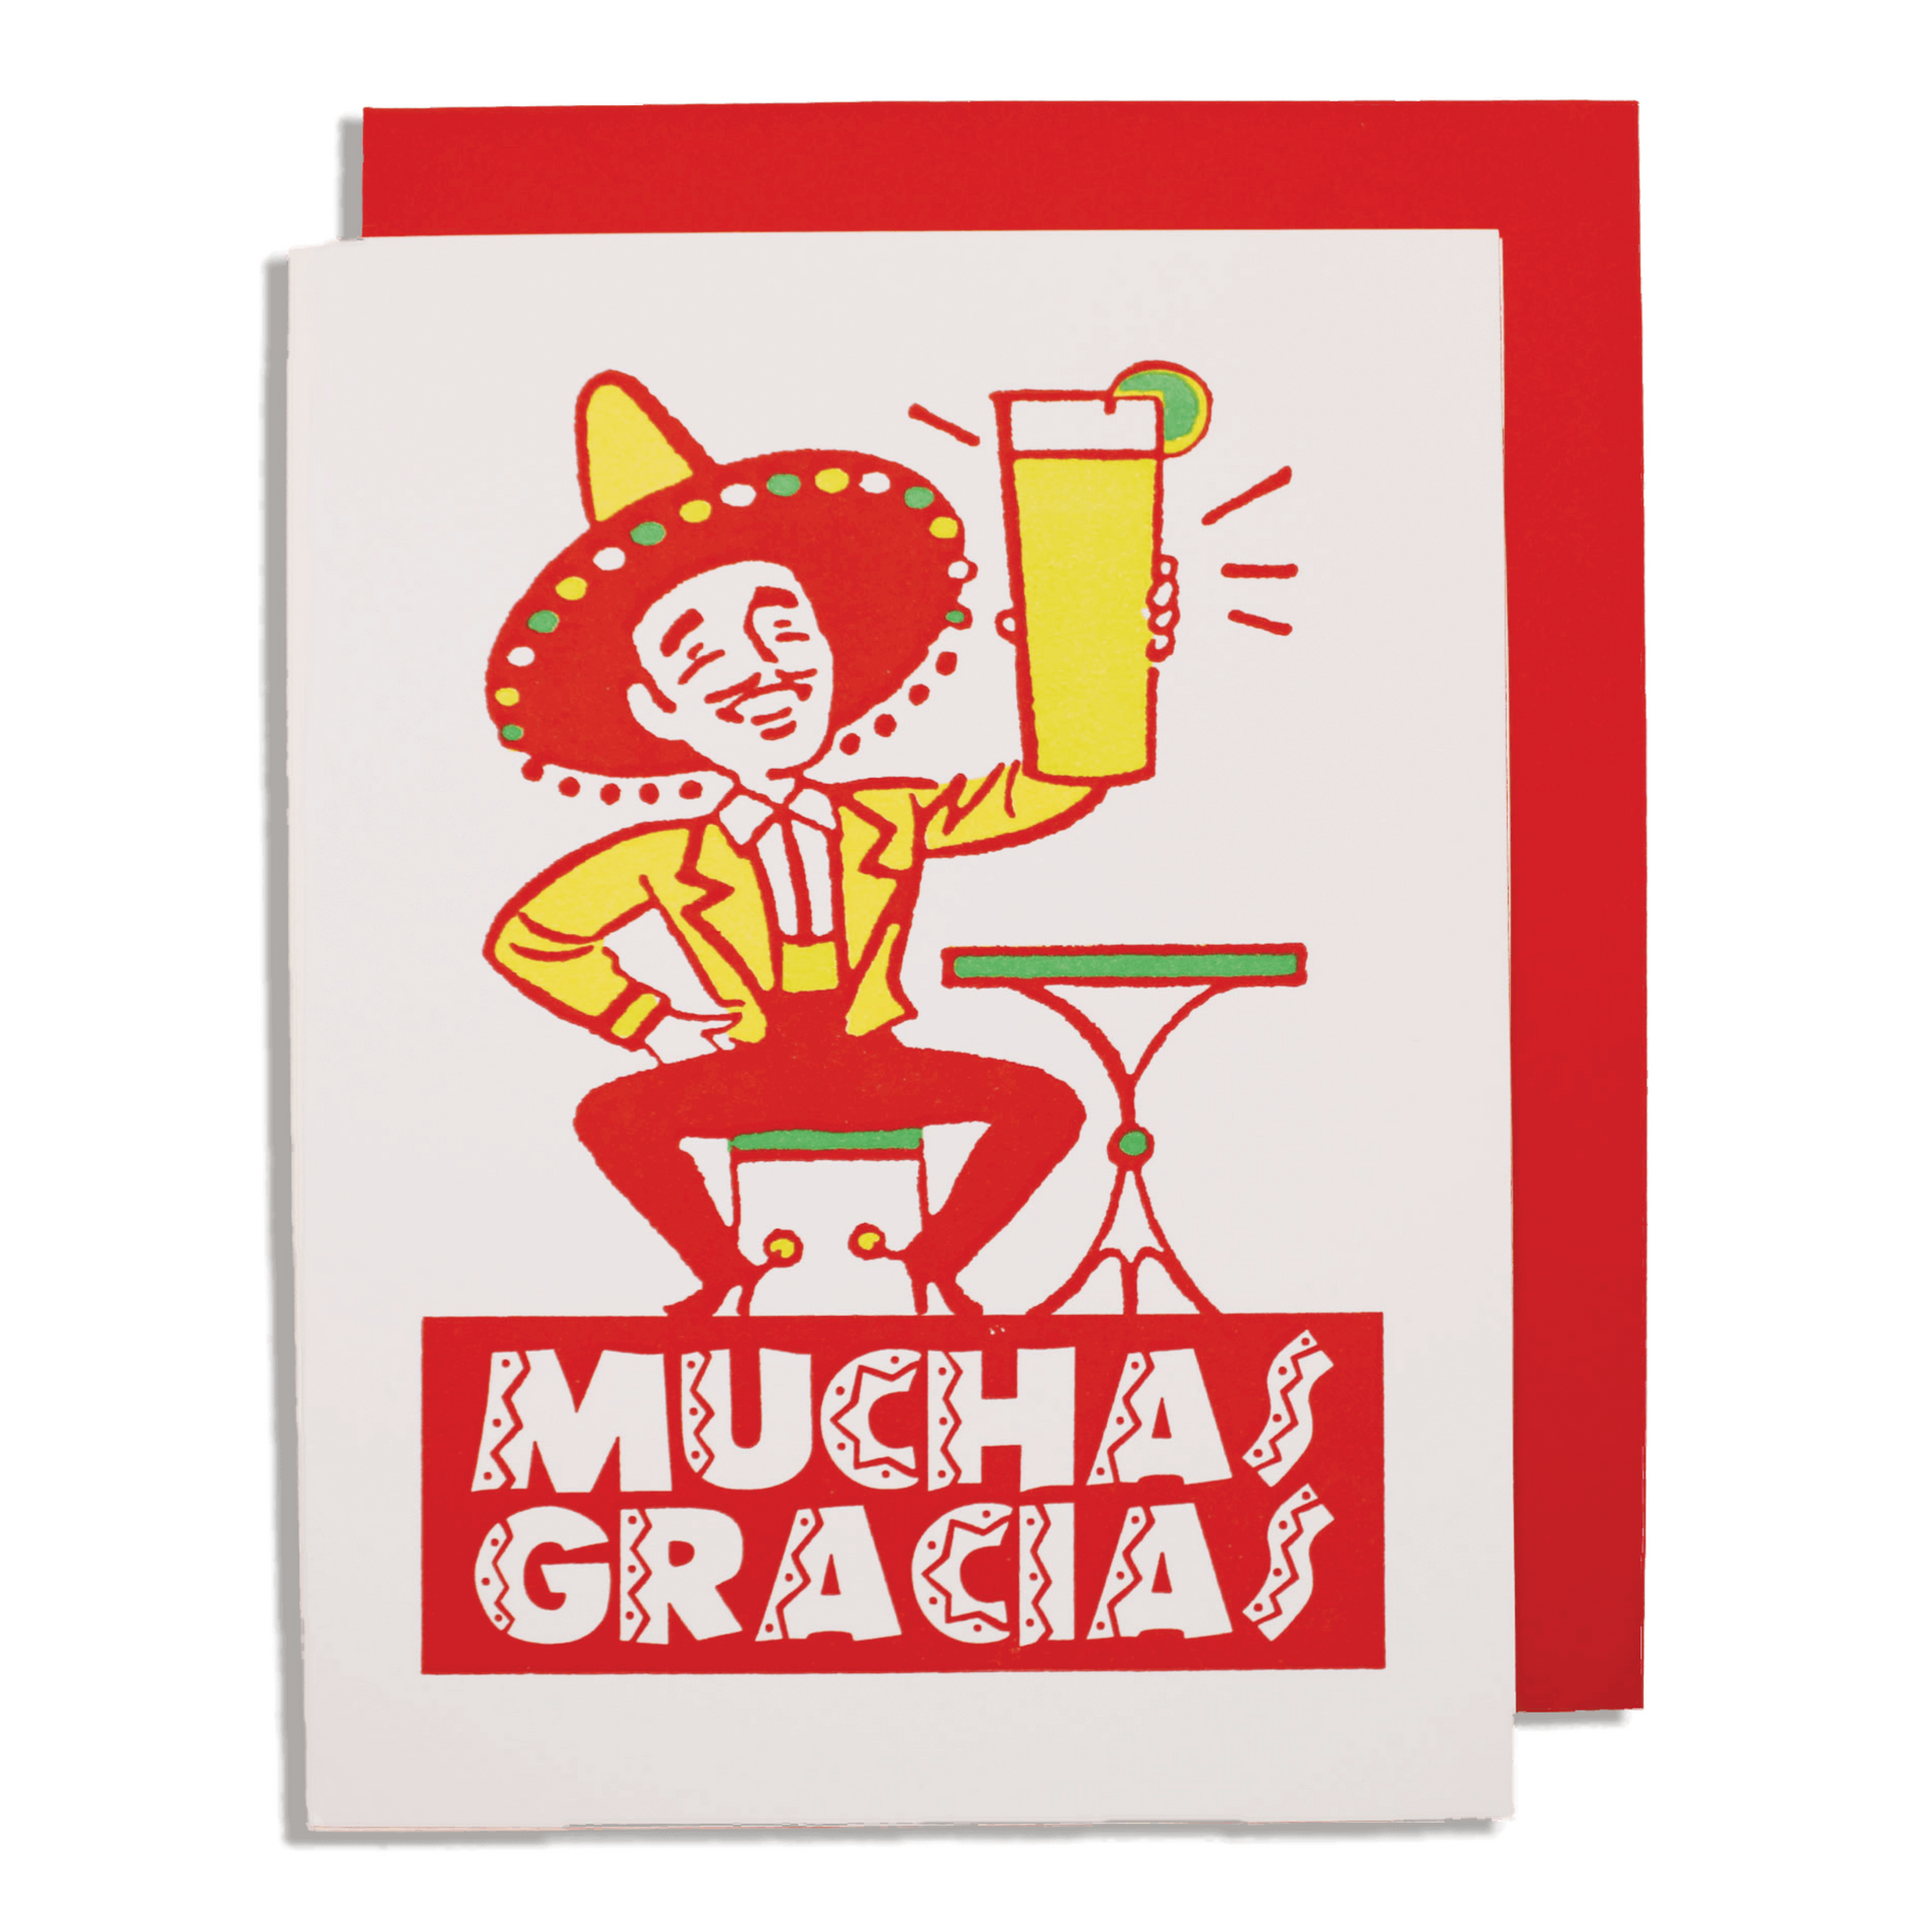 Muchas Gracias Card